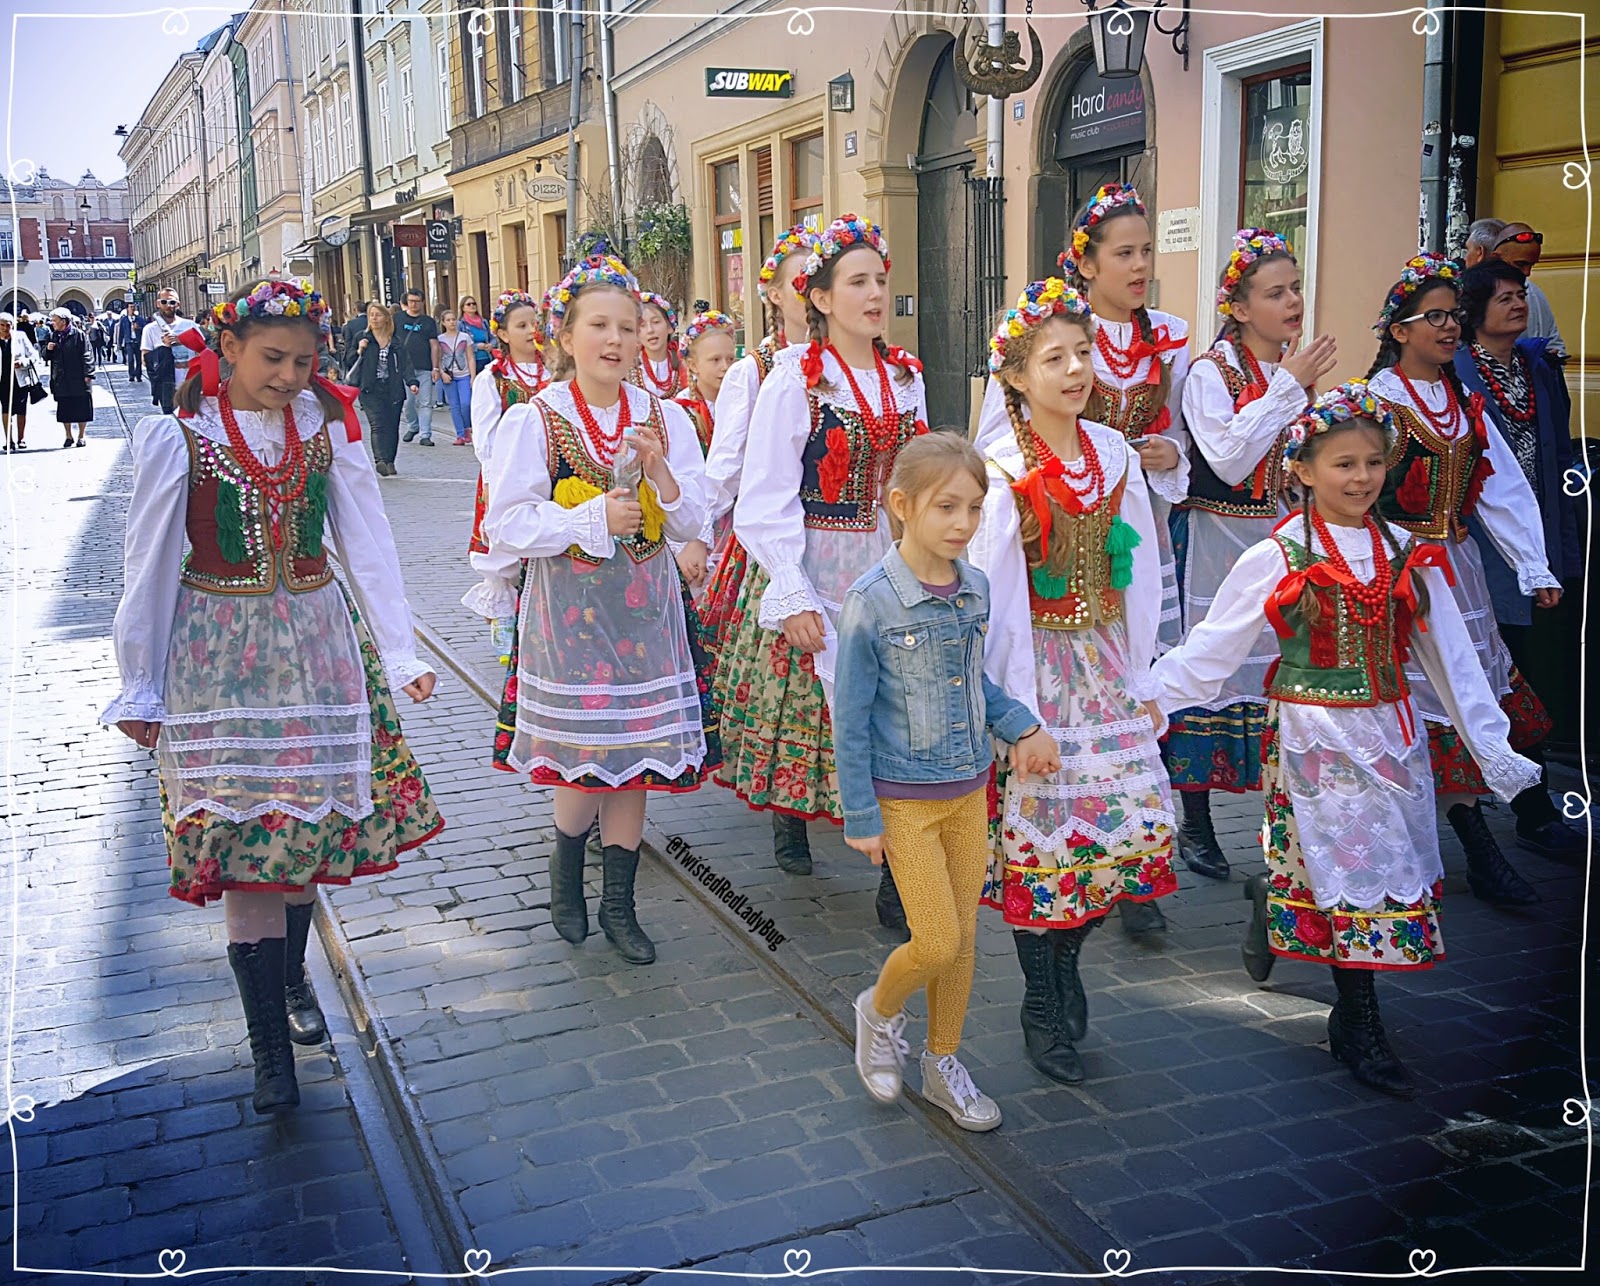 The Home Of The Twisted Red Ladybug The Krakow Polish Folk Costume